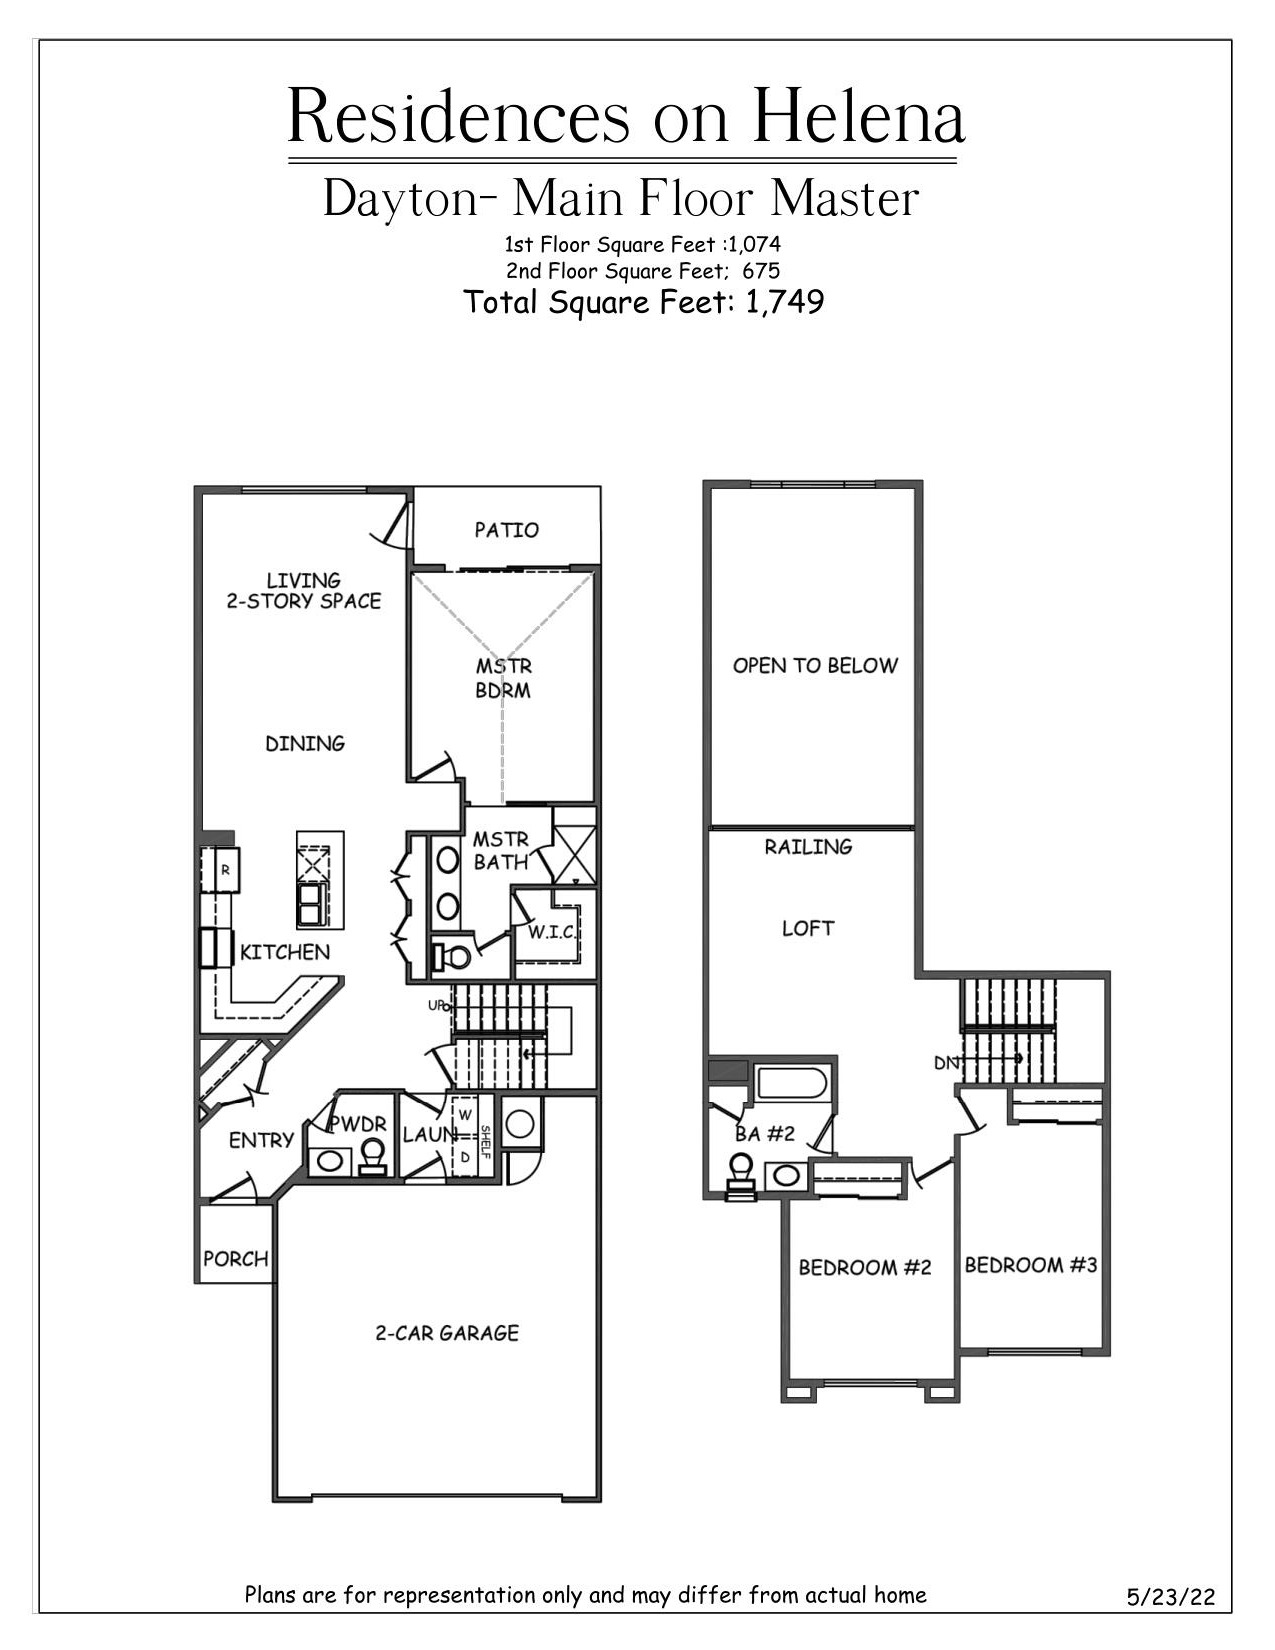 Residences on Helena Dayton Model